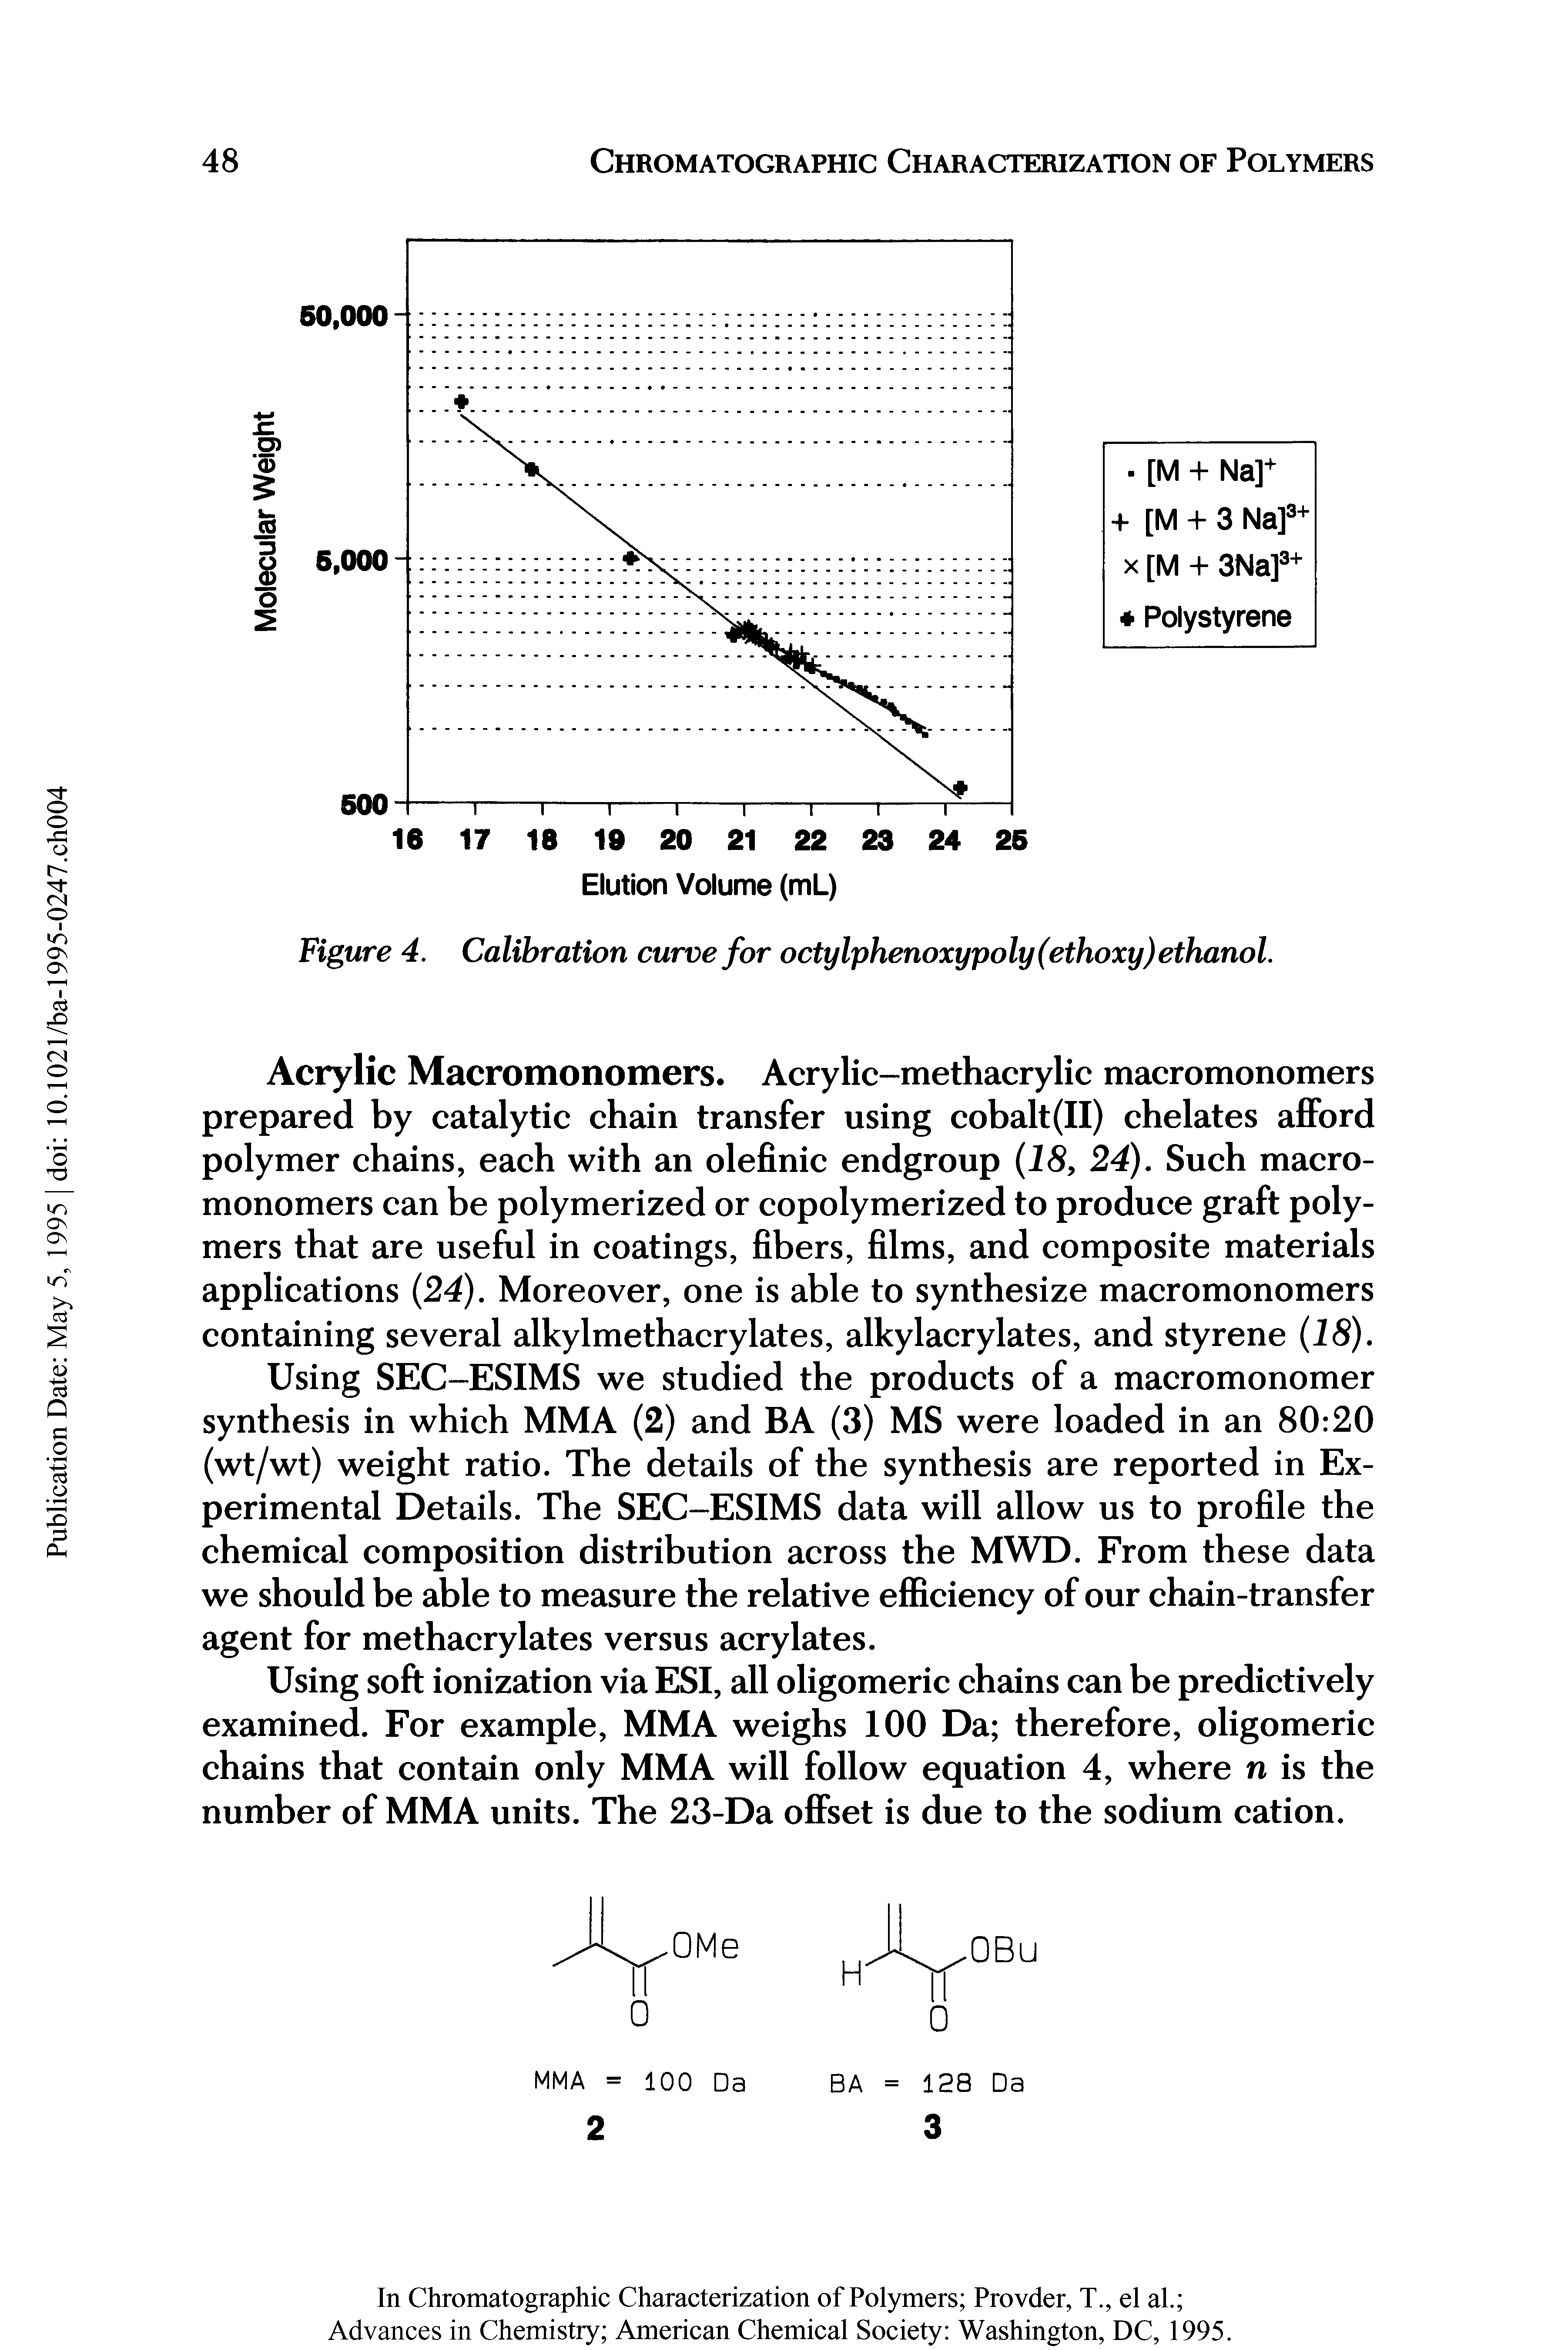 Figure 4. Calibration curve for octylphenoxypoly (ethoxy) ethanol.